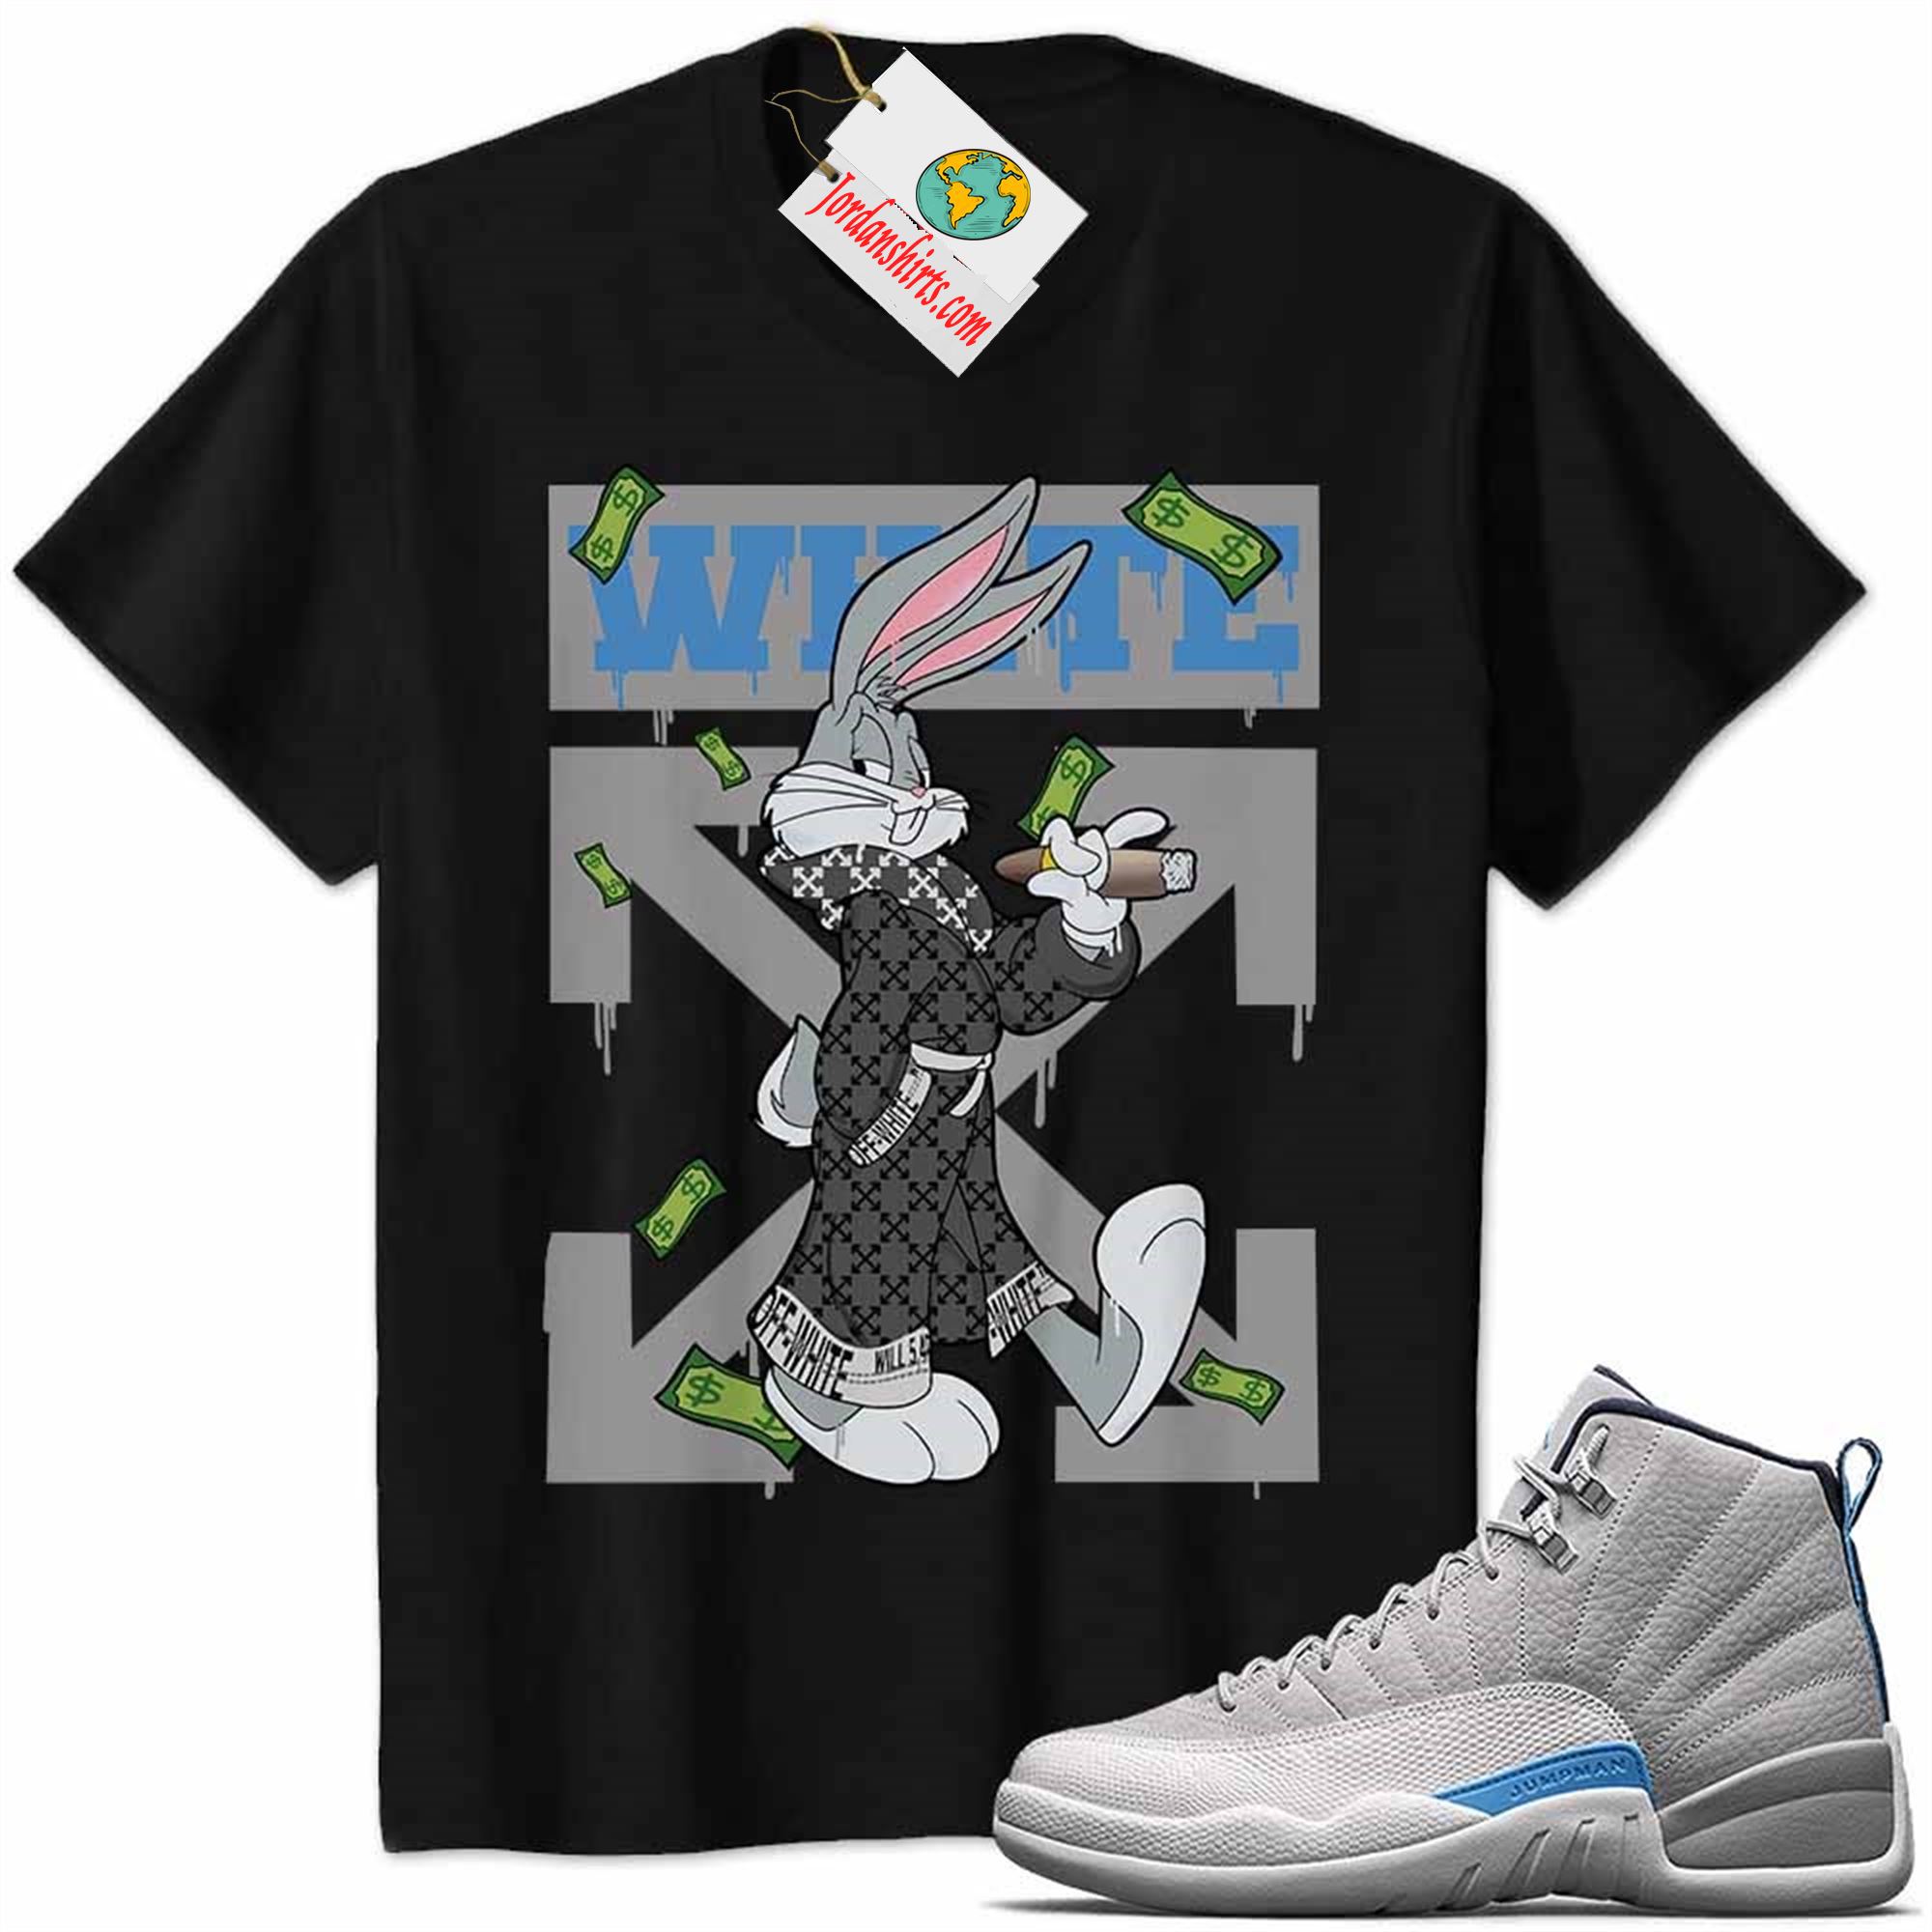 Jordan 12 Shirt, Jordan 12 Wolf Grey Shirt Bug Bunny Smokes Weed Money Falling Black Plus Size Up To 5xl